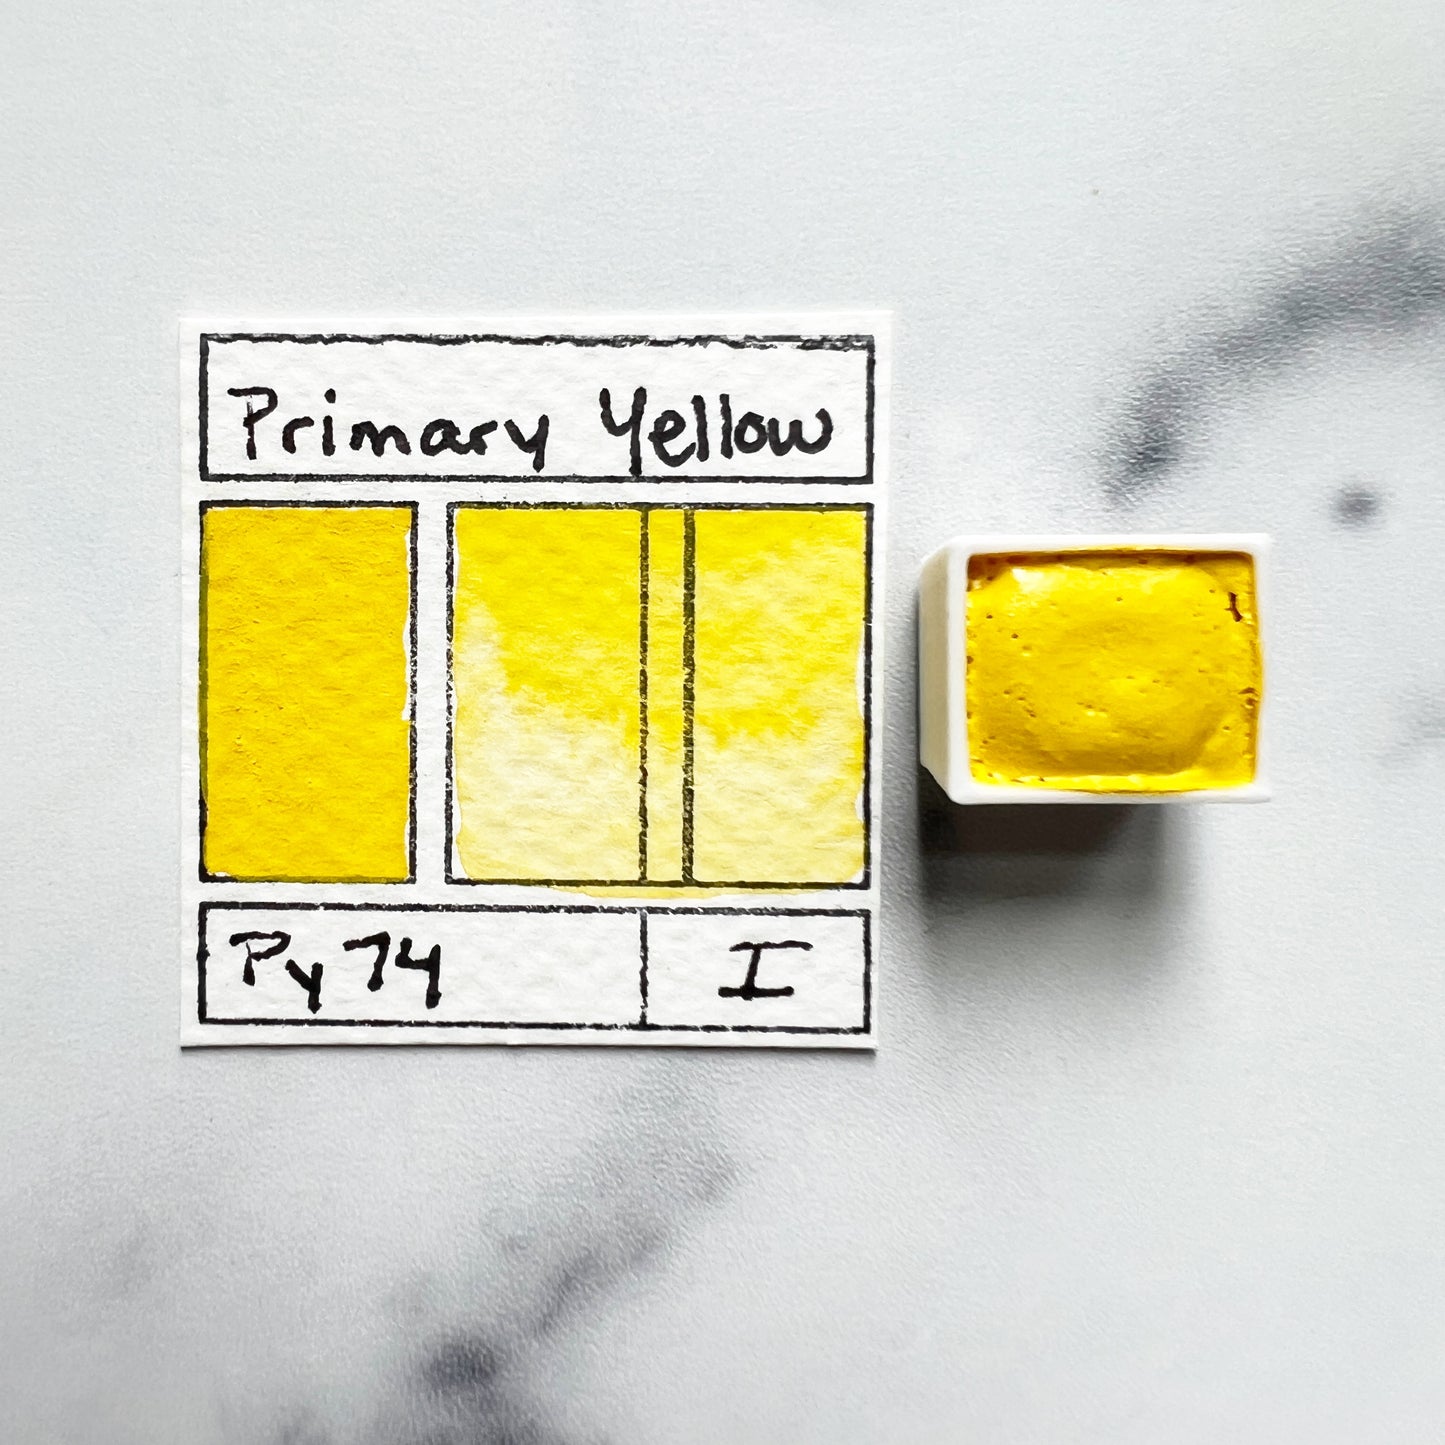 Primary Yellow. Half pan or bottle cap of handmade watercolor paint